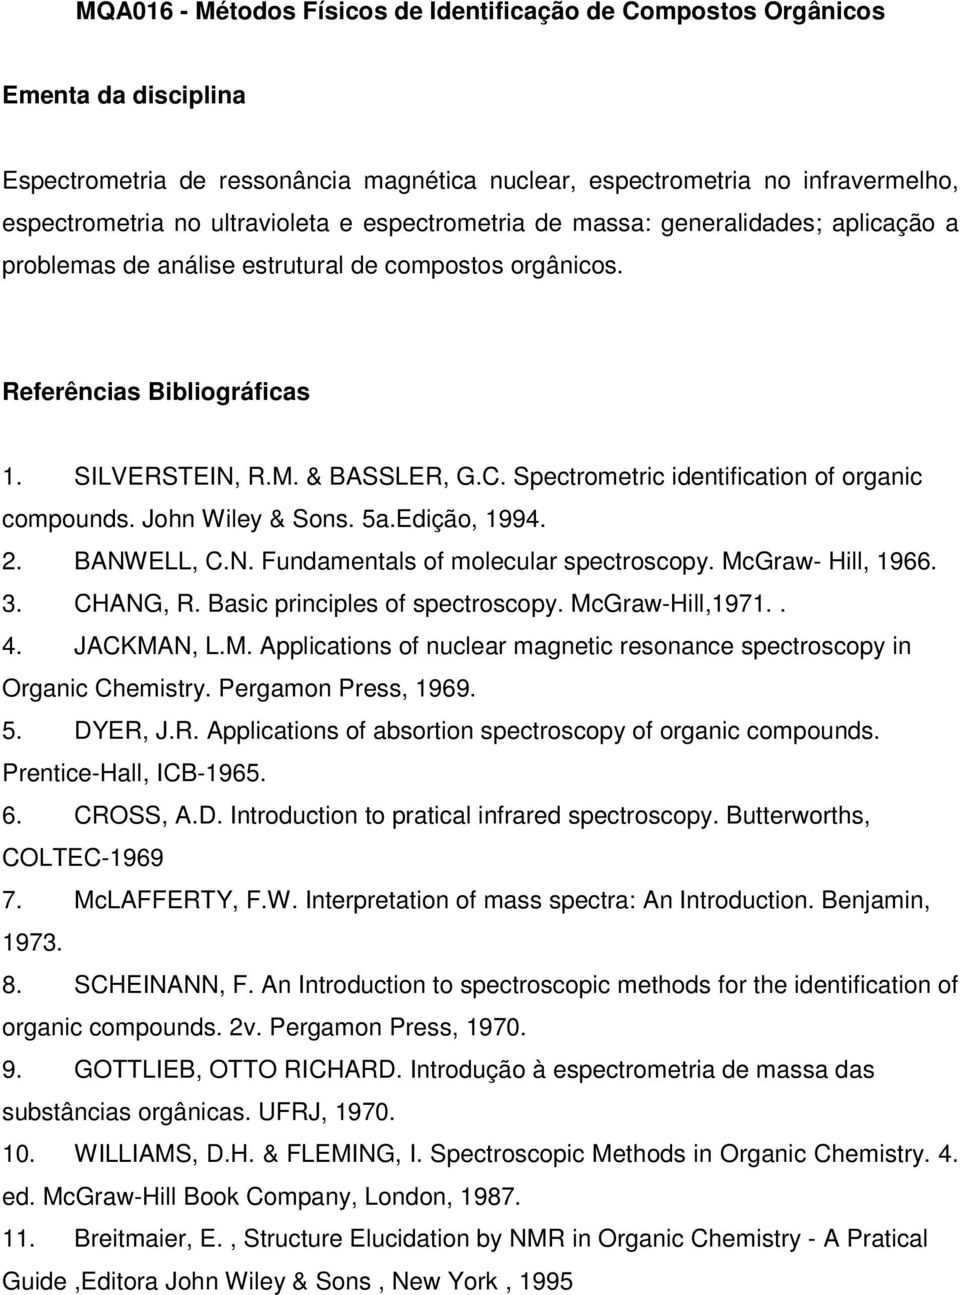 Edição, 1994. 2. BANWELL, C.N. Fundamentals of molecular spectroscopy. McGraw- Hill, 1966. 3. CHANG, R. Basic principles of spectroscopy. McGraw-Hill,1971.. 4. JACKMAN, L.M. Applications of nuclear magnetic resonance spectroscopy in Organic Chemistry.